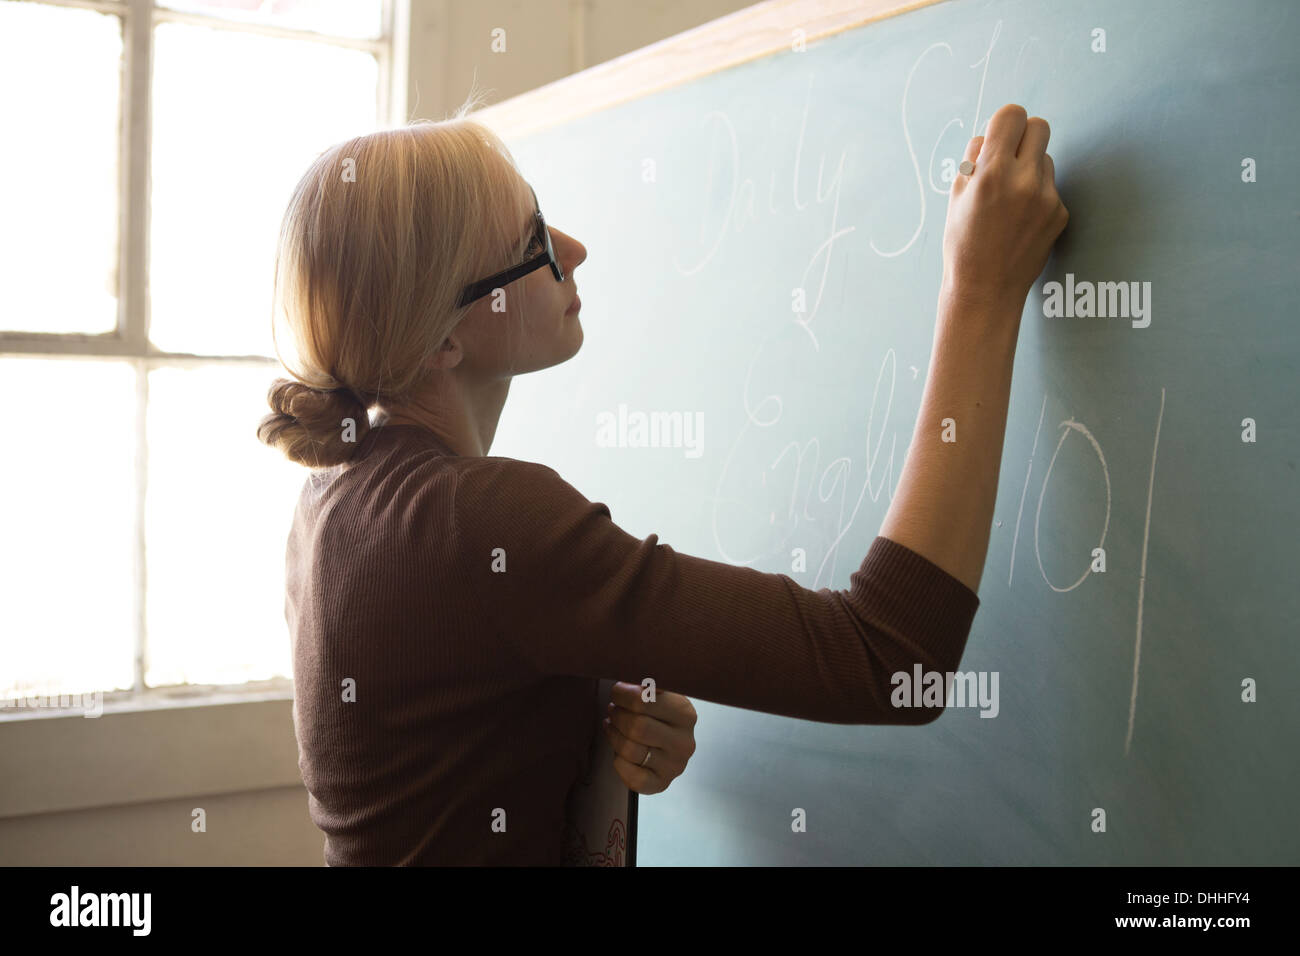 Teacher writing on blackboard with chalk Stock Photo